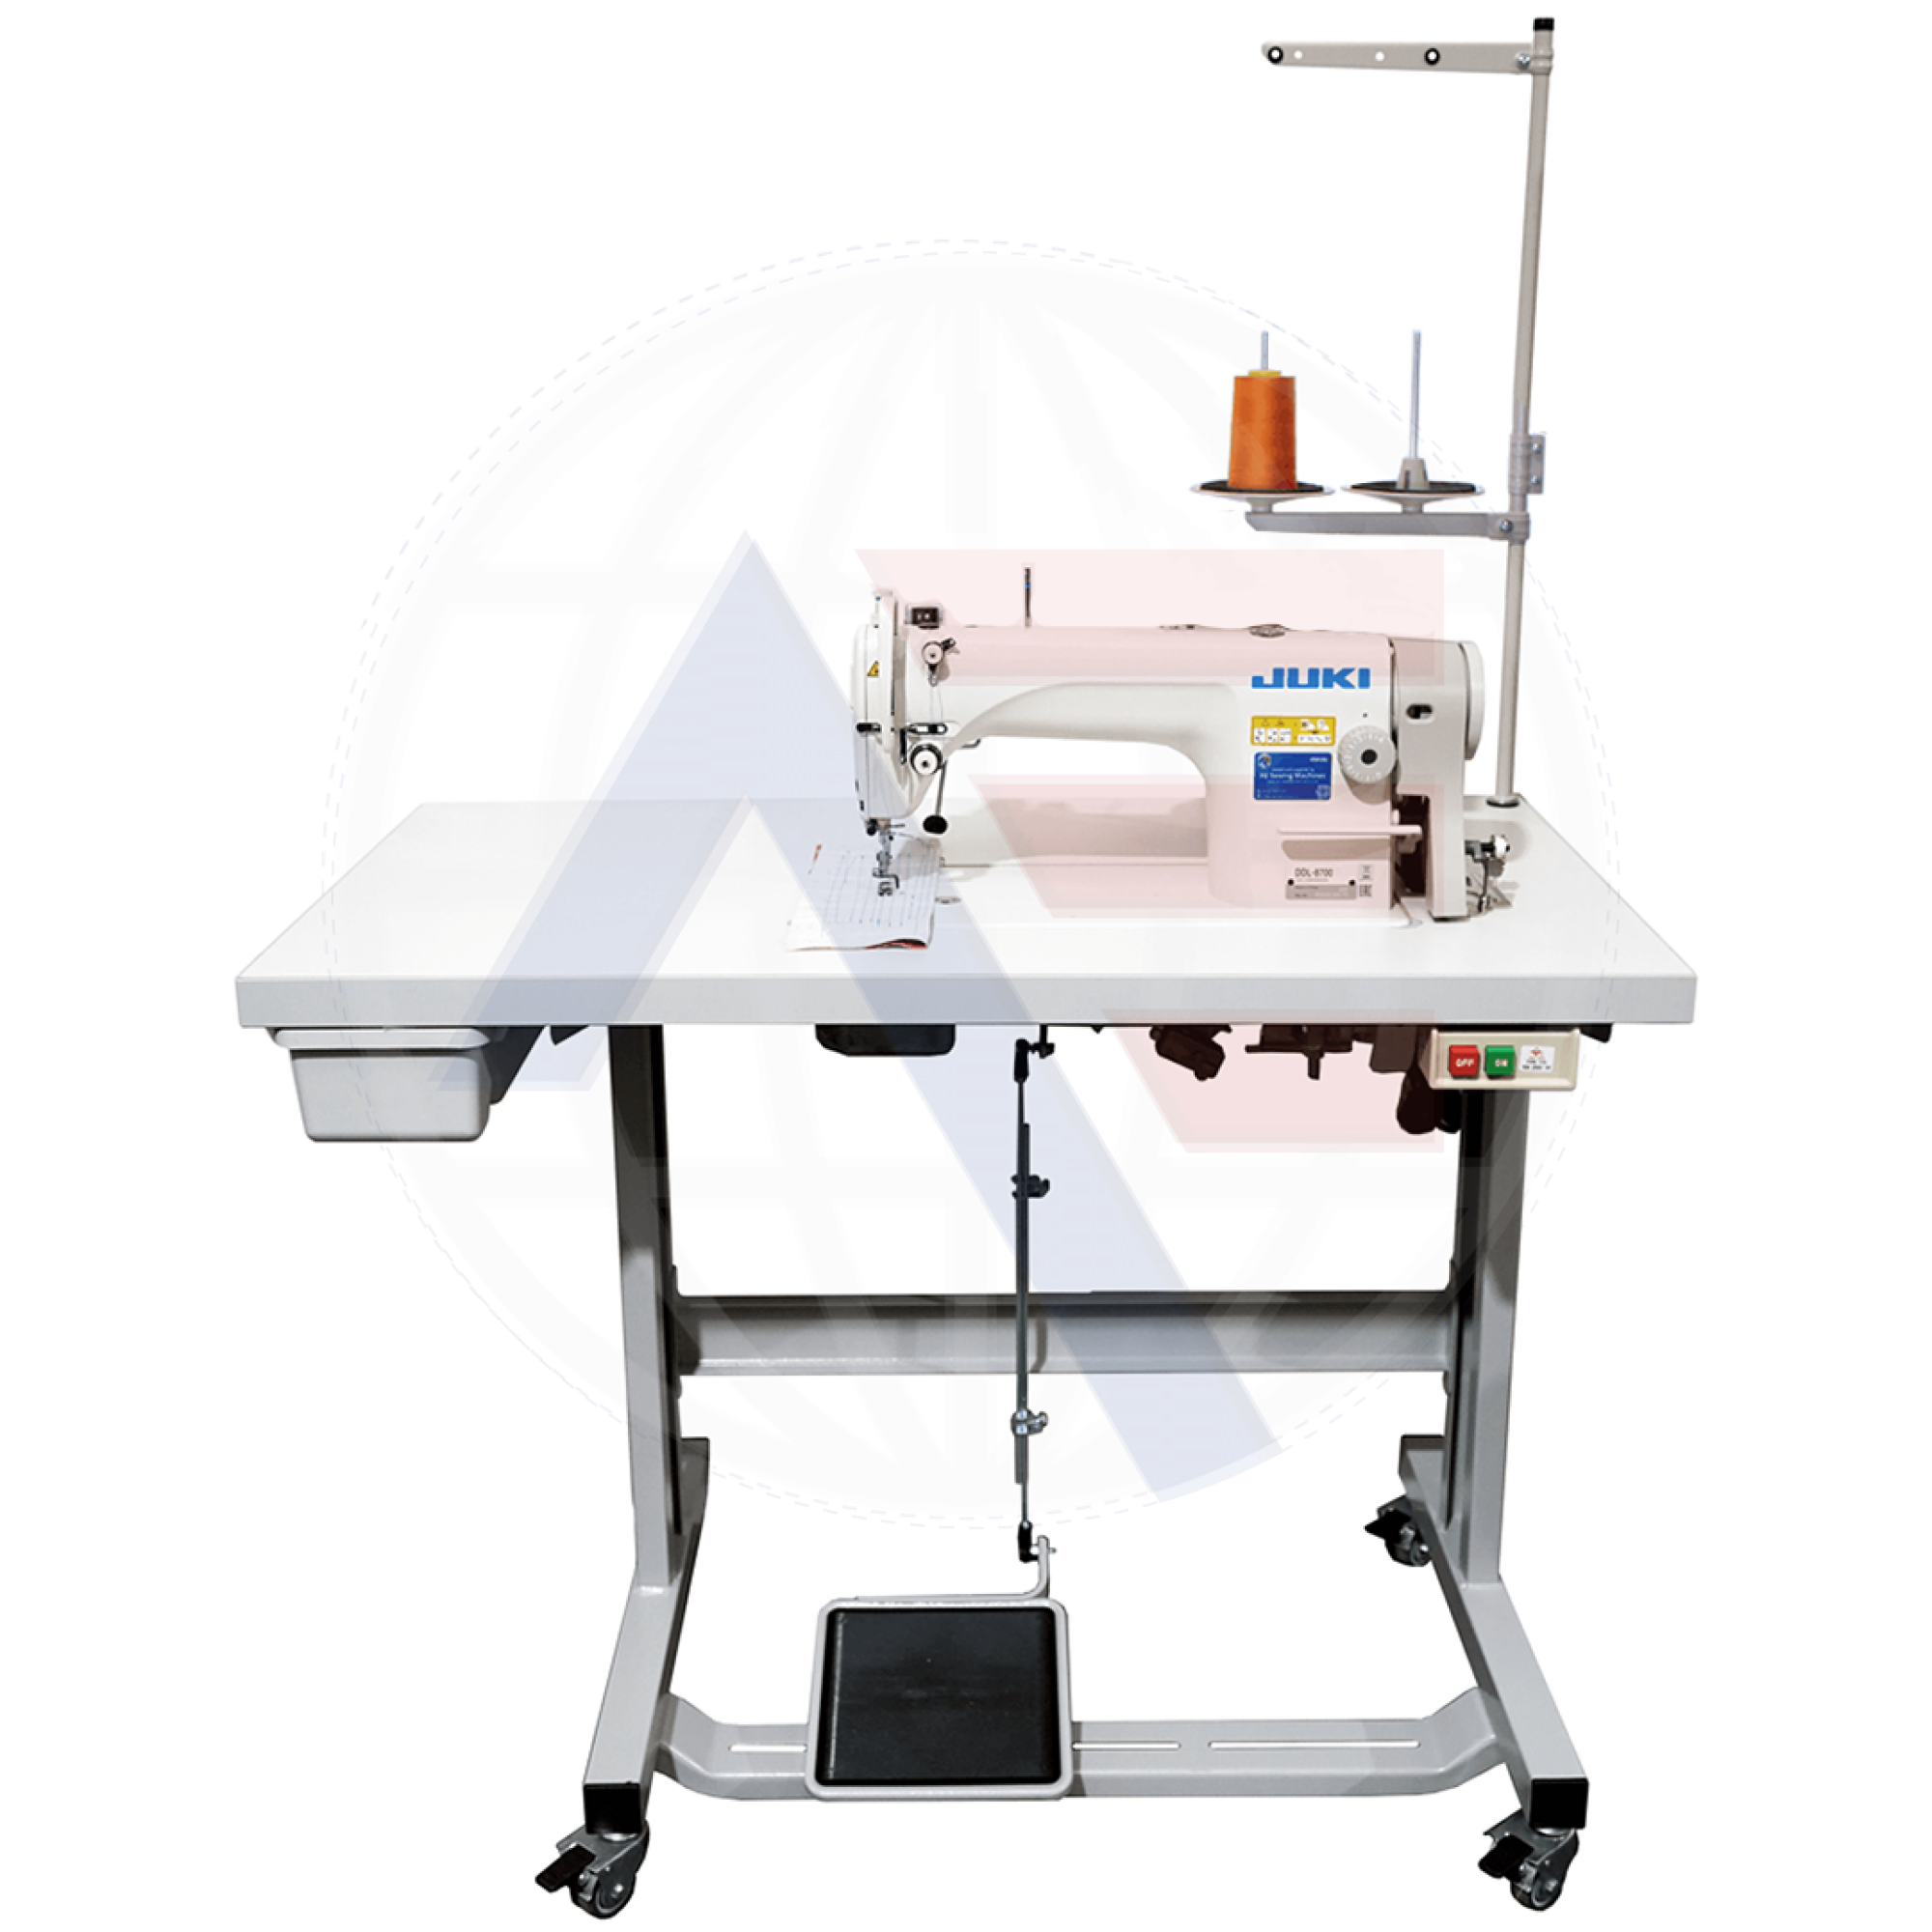 Juki Ddl - 8700 1 - Needle Lockstitch Machine Sewing Machines